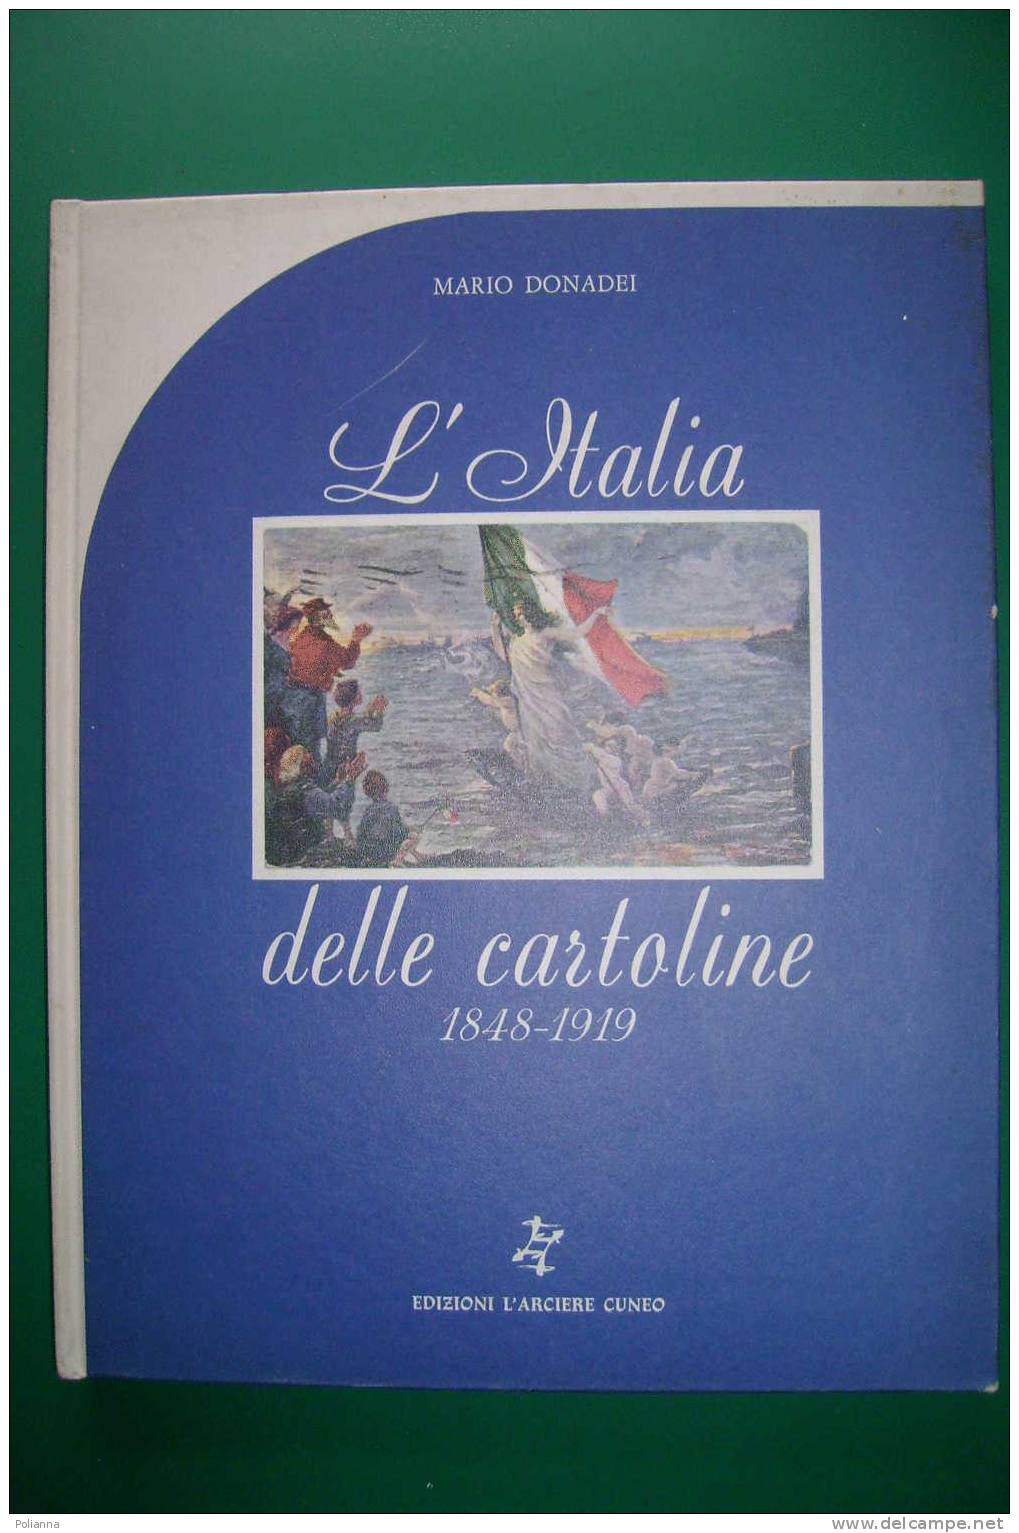 PDL/16 Donadei L´ITALIA DELLE CARTOLINE 1848-1919 L´Arciere 1977 - Handleiding Voor Verzamelaars